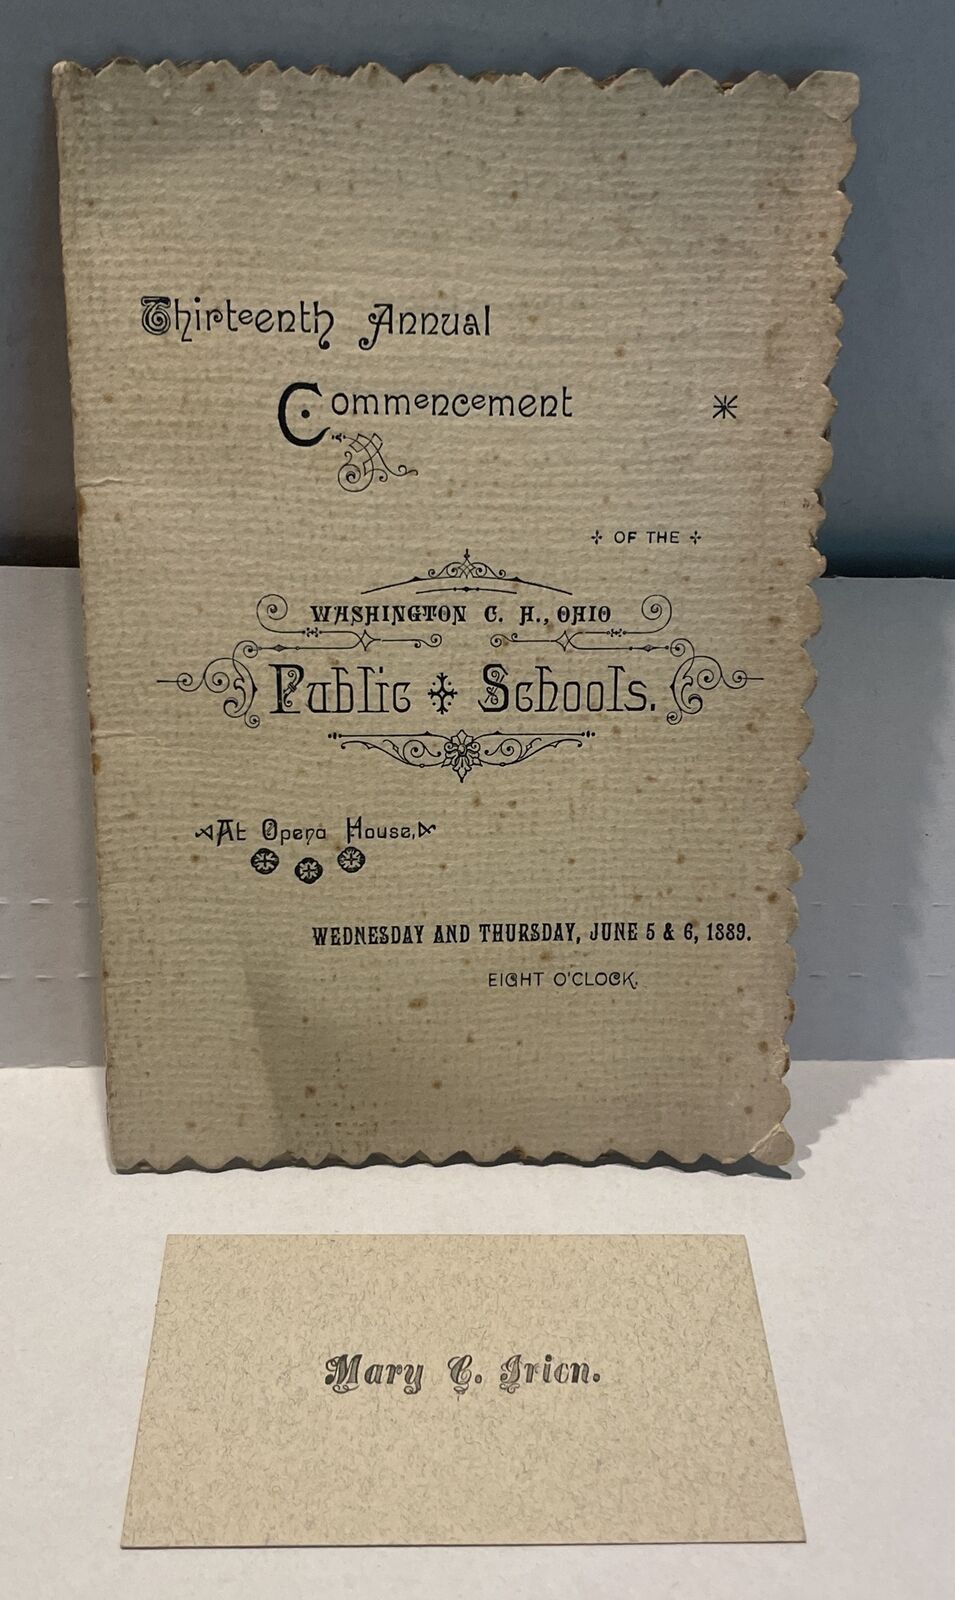 1889 Washington Ohio  Public School Annual Commencement Program At Opera House